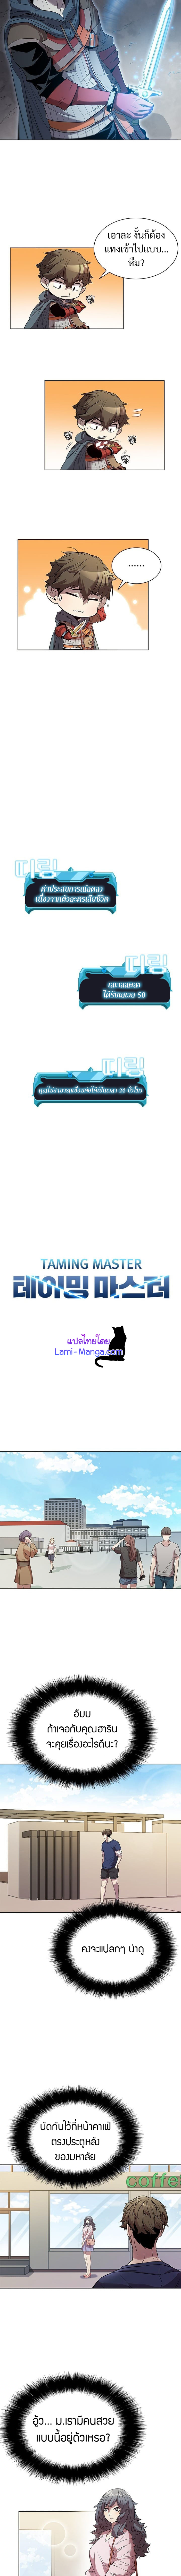 Taming Master 28 02